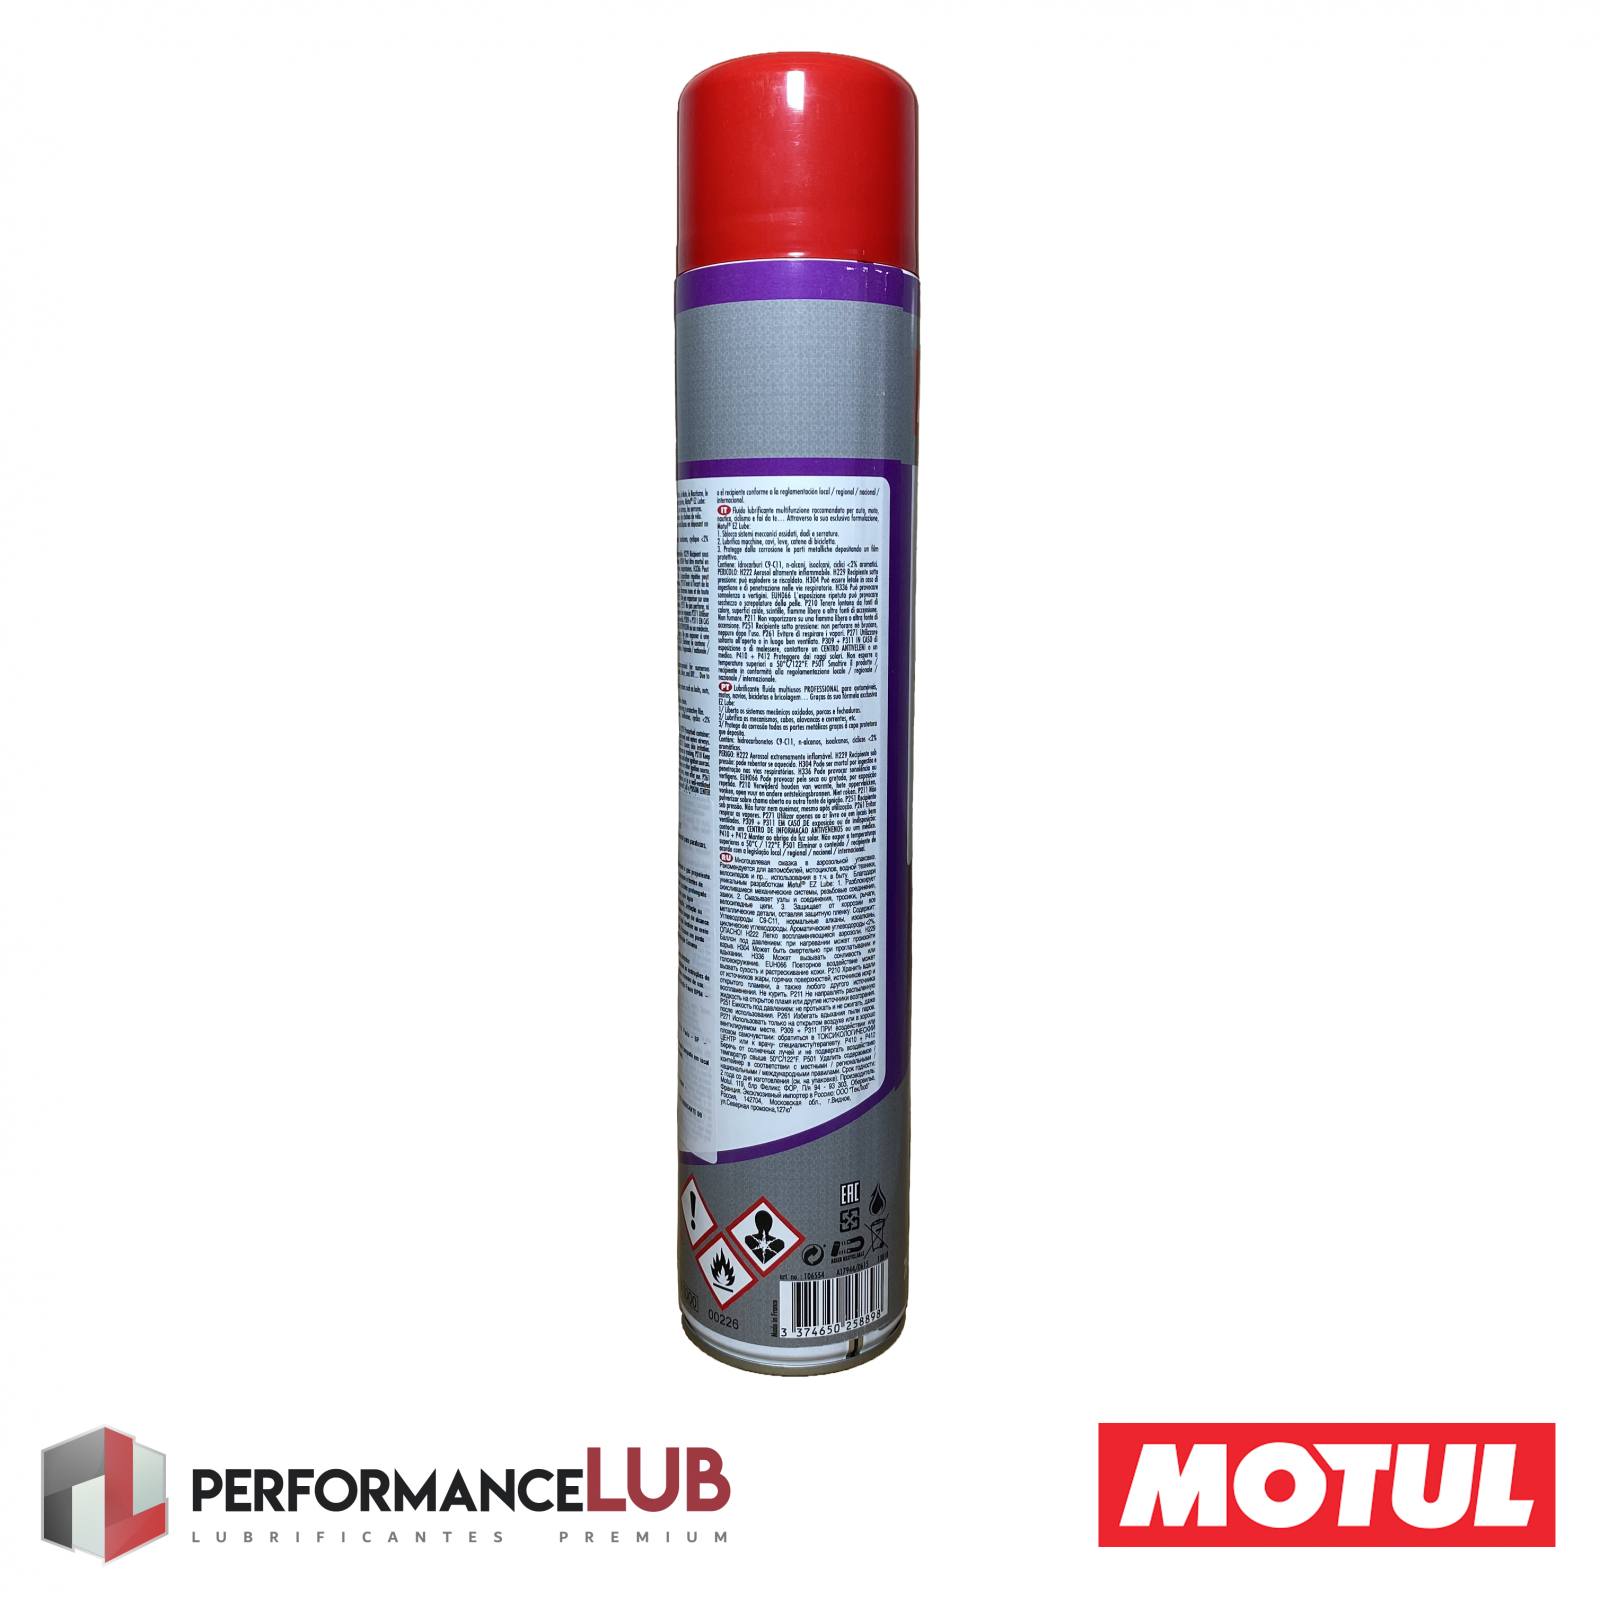 Motul EZ Lube - 750 ml - PerformanceLUB Lubrificantes Premium